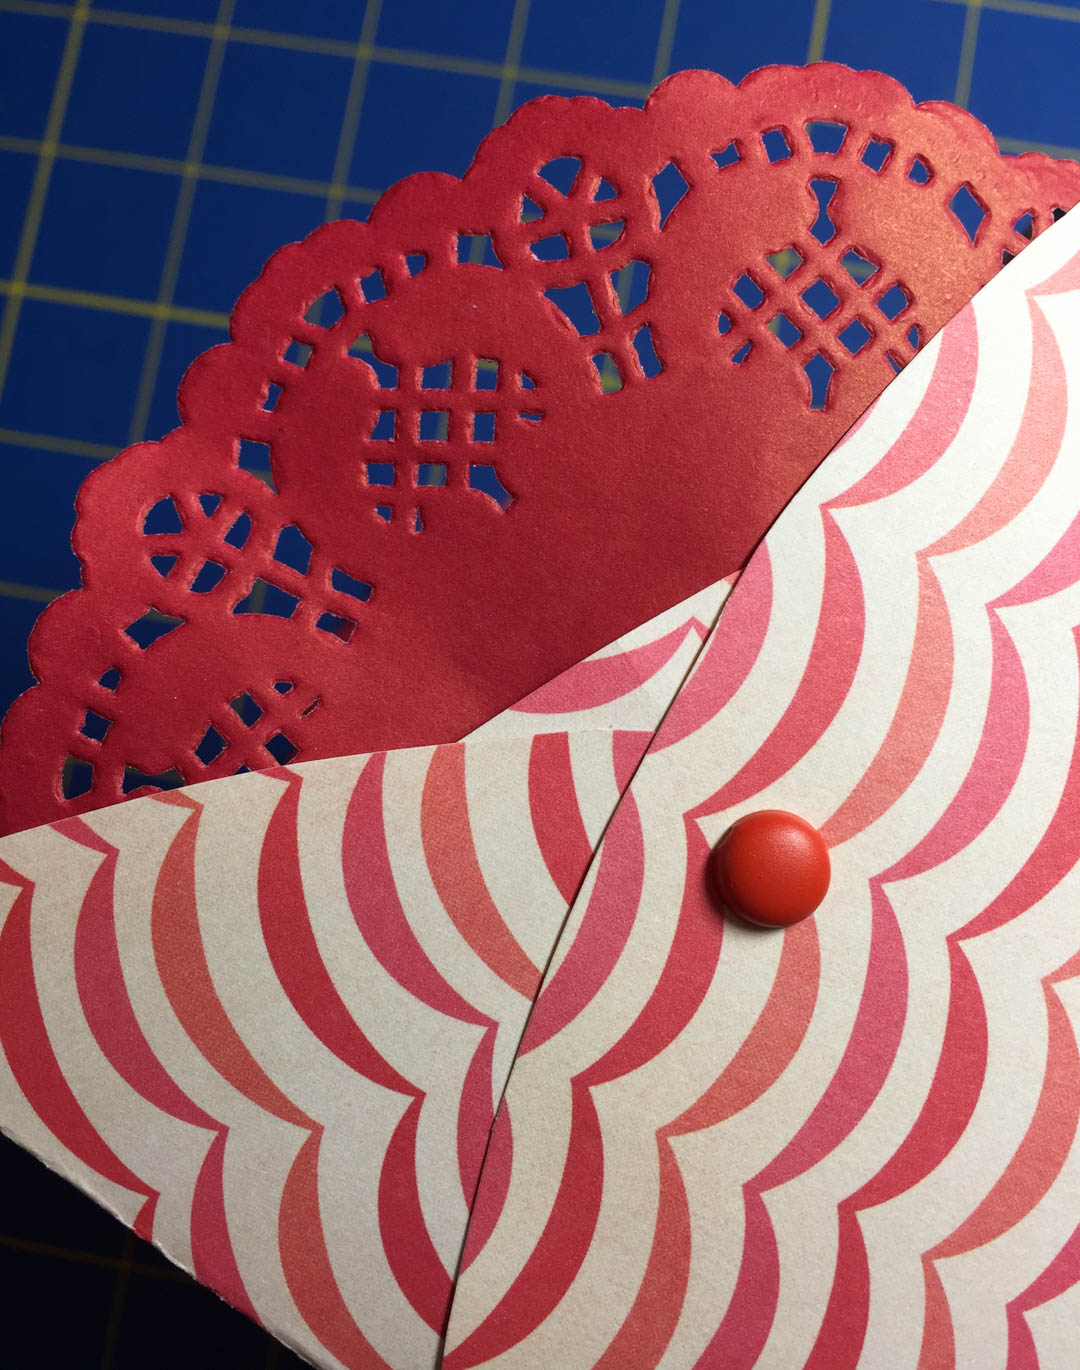 Cookie Basket Tutorial using Scrapbook Paper